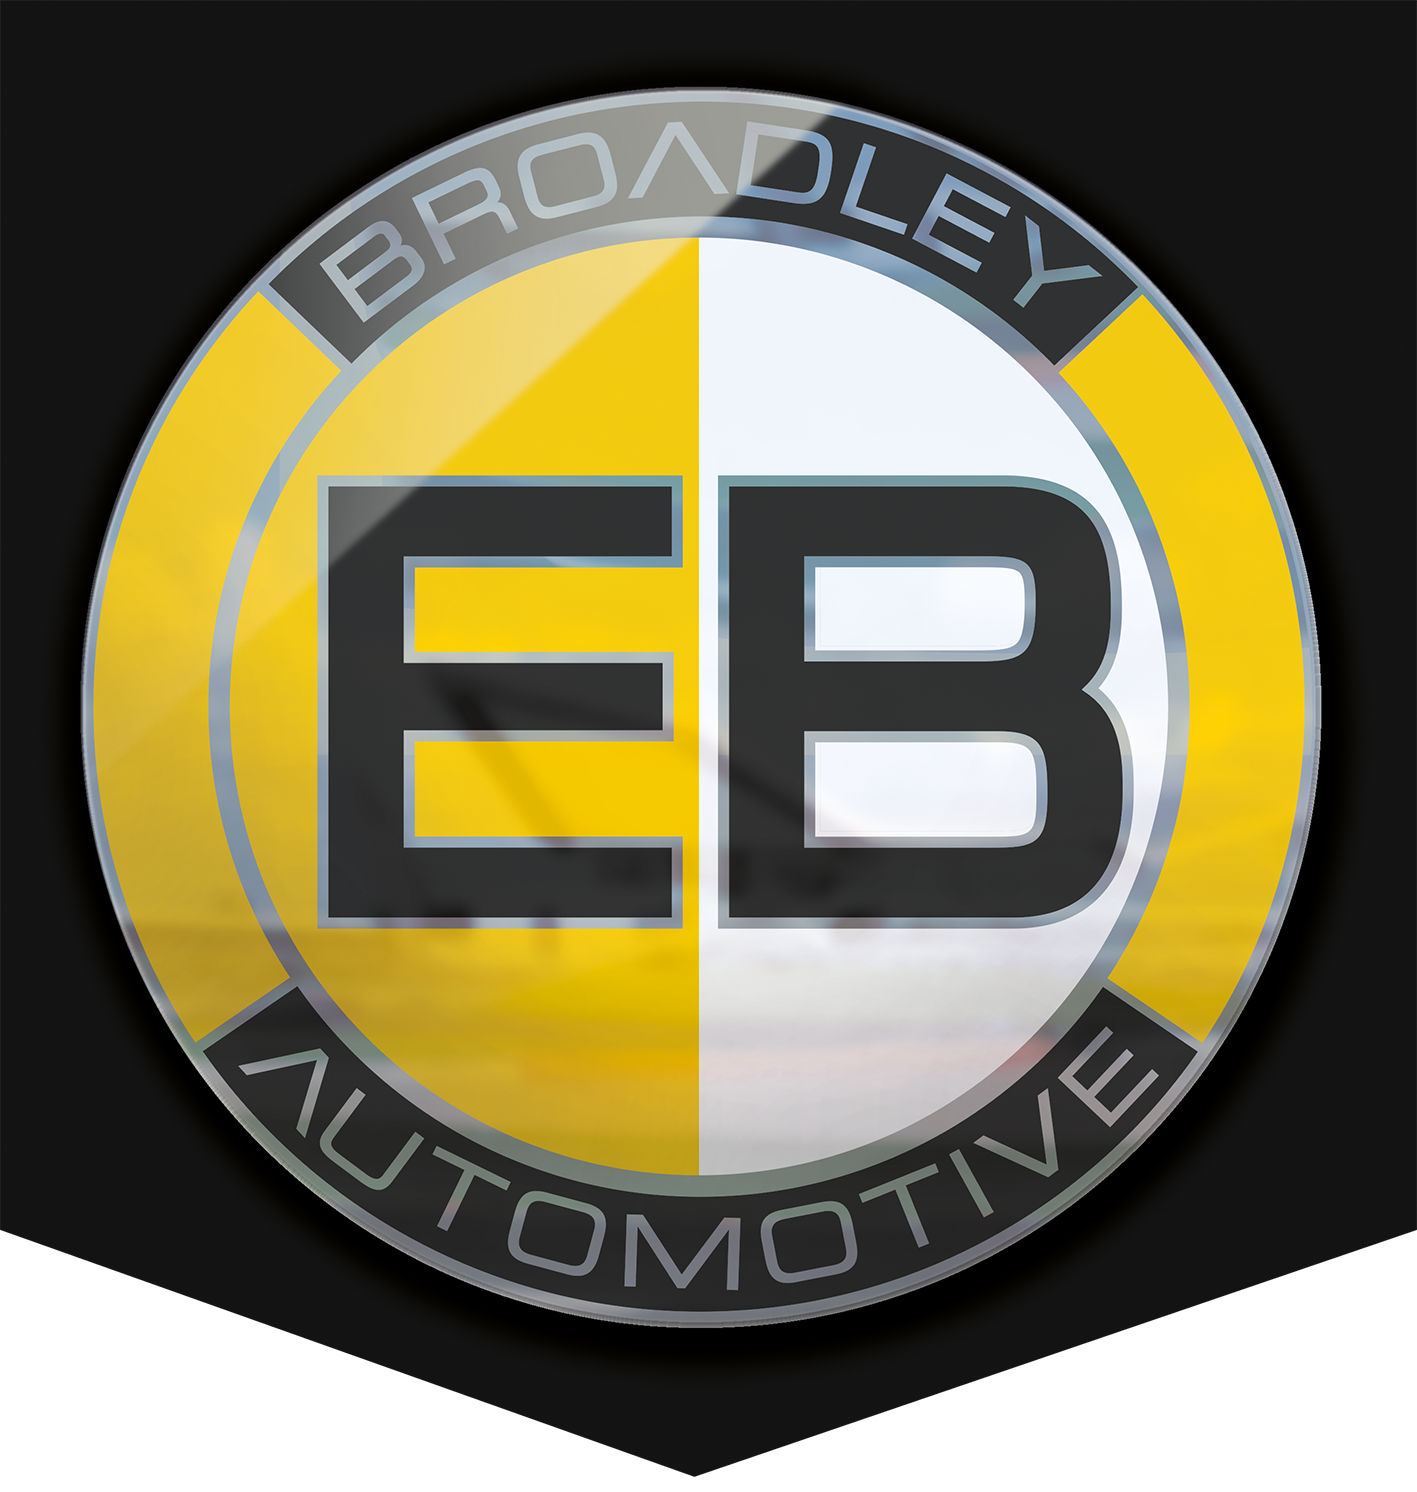 Broadley Automotive logo